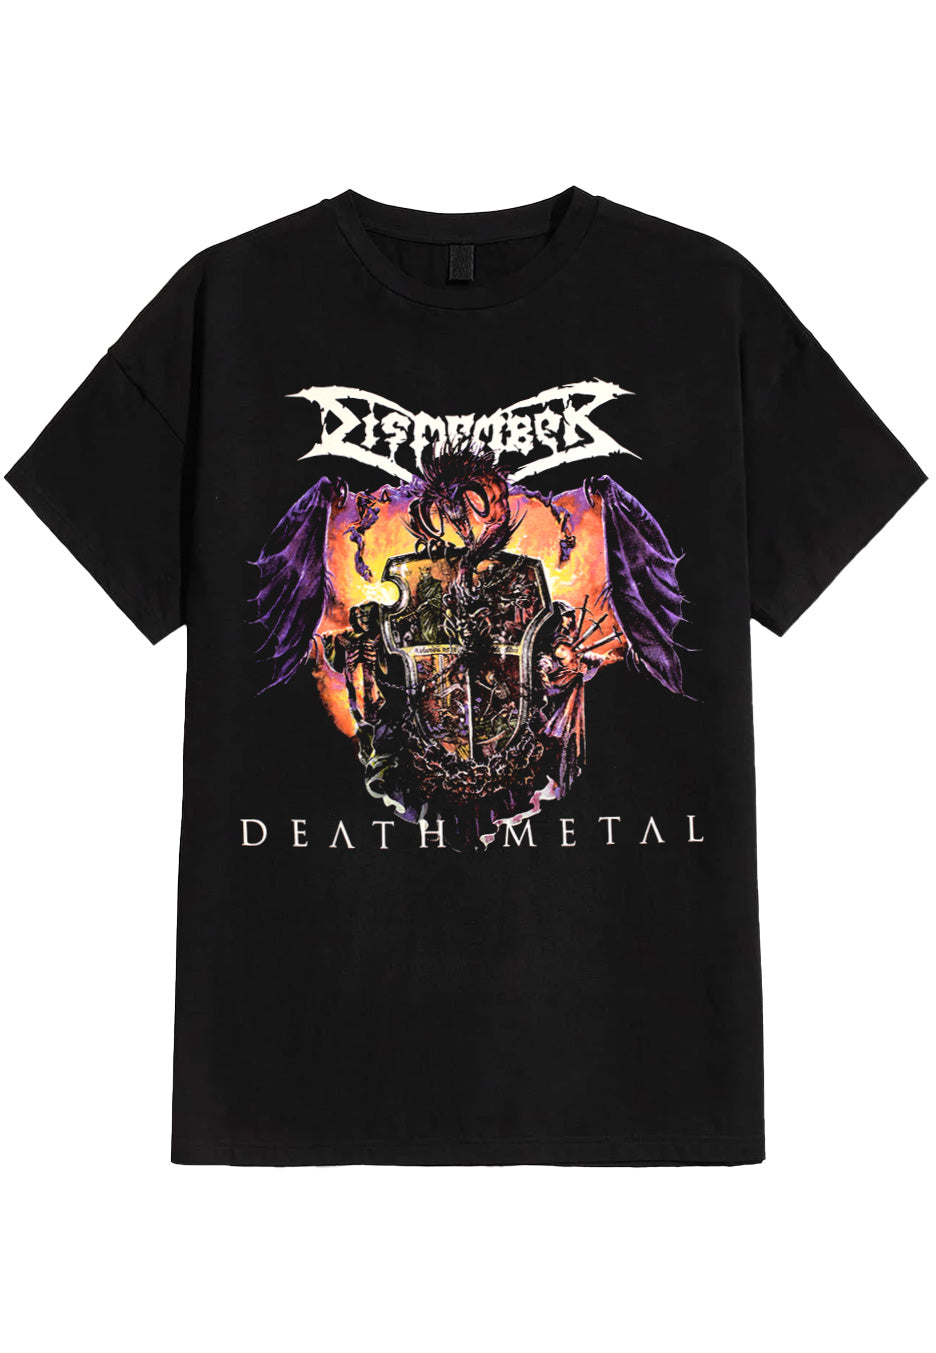 Dismember - Death Metal - T-Shirt